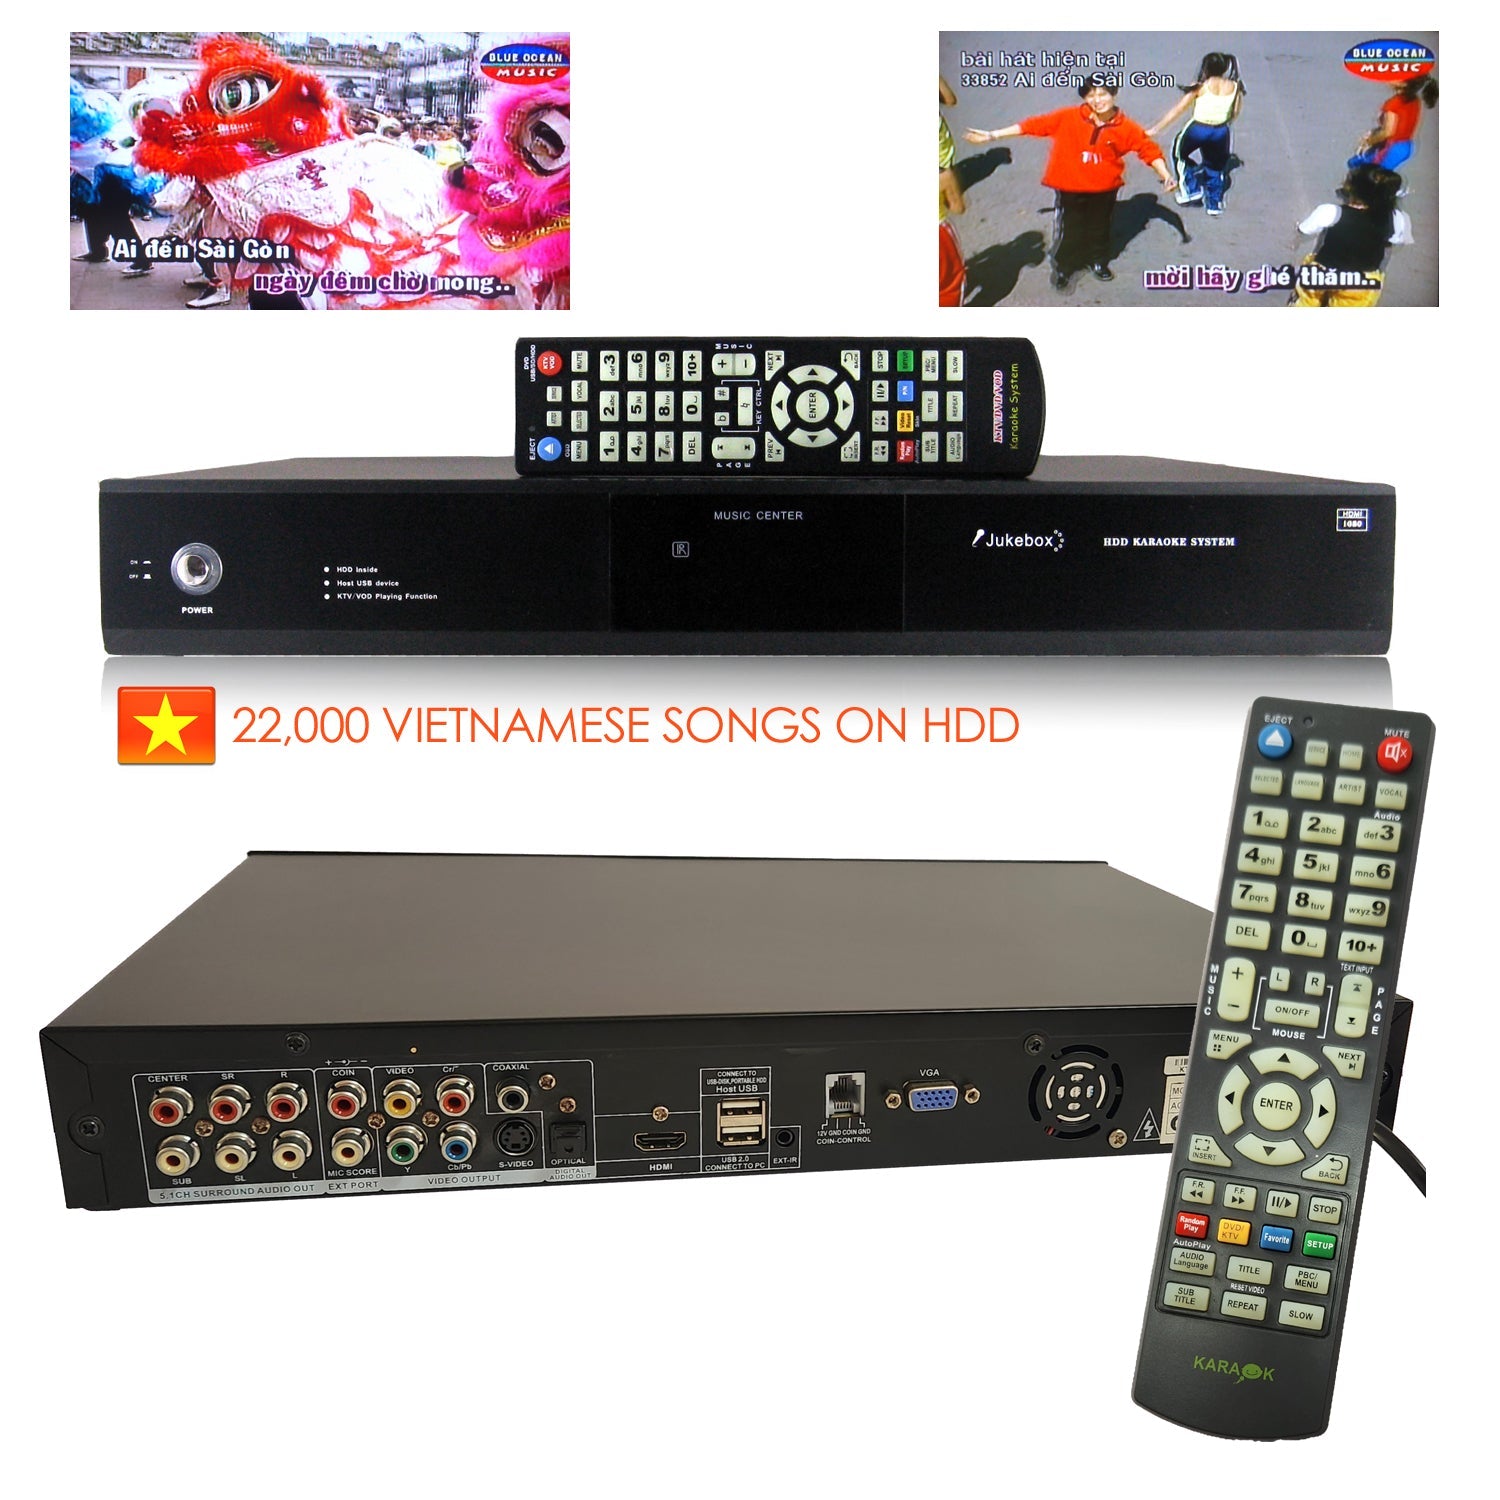 Vietnamese Karaoke Hard Drive System with 22,000 Vietnamese Songs (2TB) - Karaoke Home Entertainment